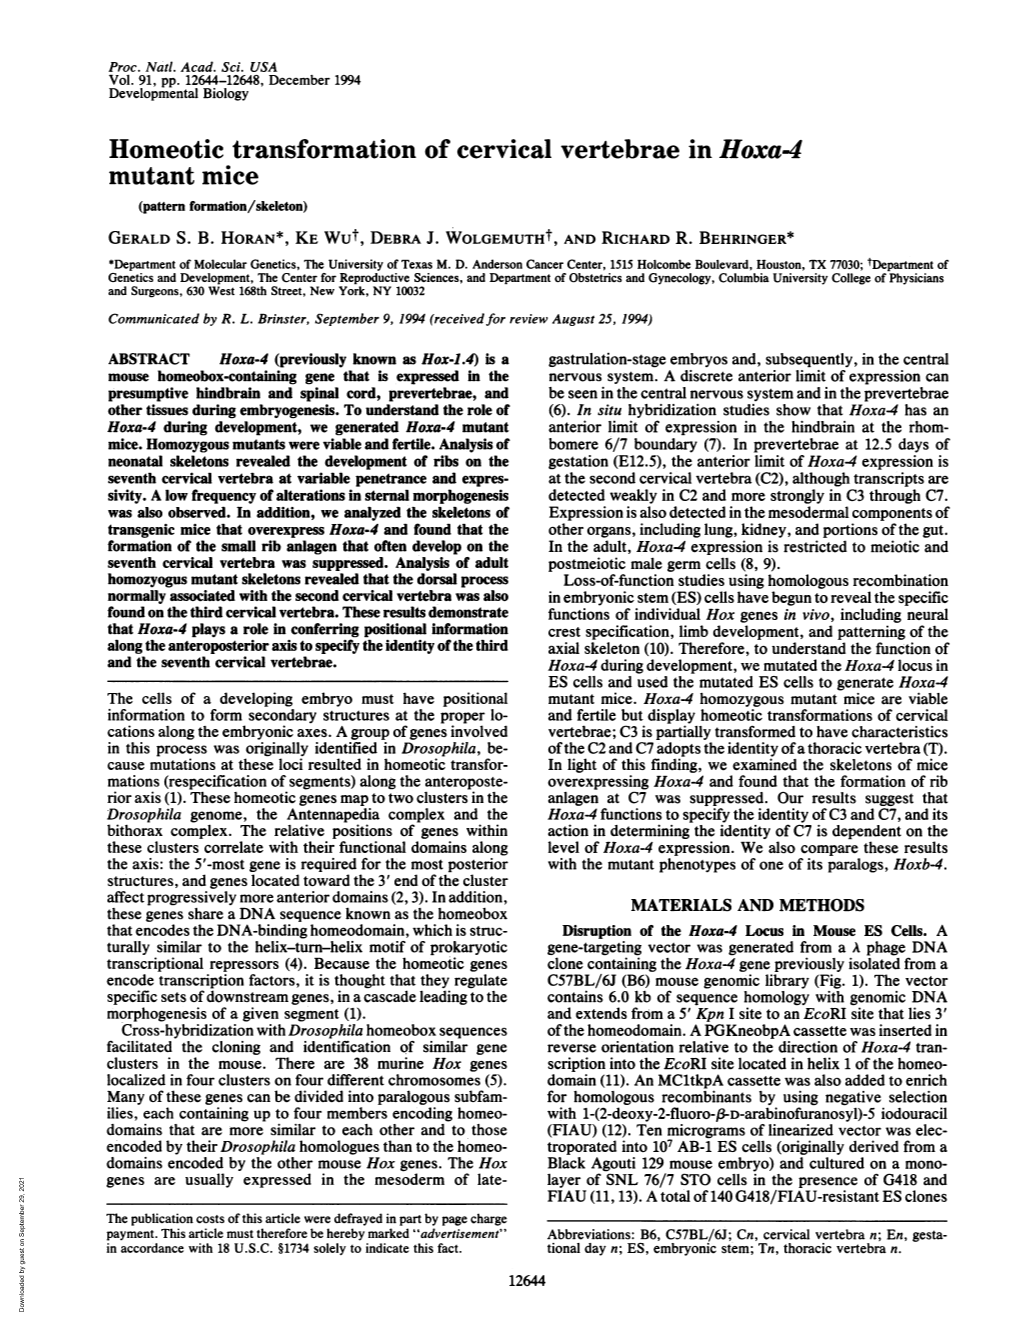 Homeotic Transformation of Cervical Vertebrae in Hoxa4 Mutant Mice (Pattern Formation/Skeleton) GERALD S